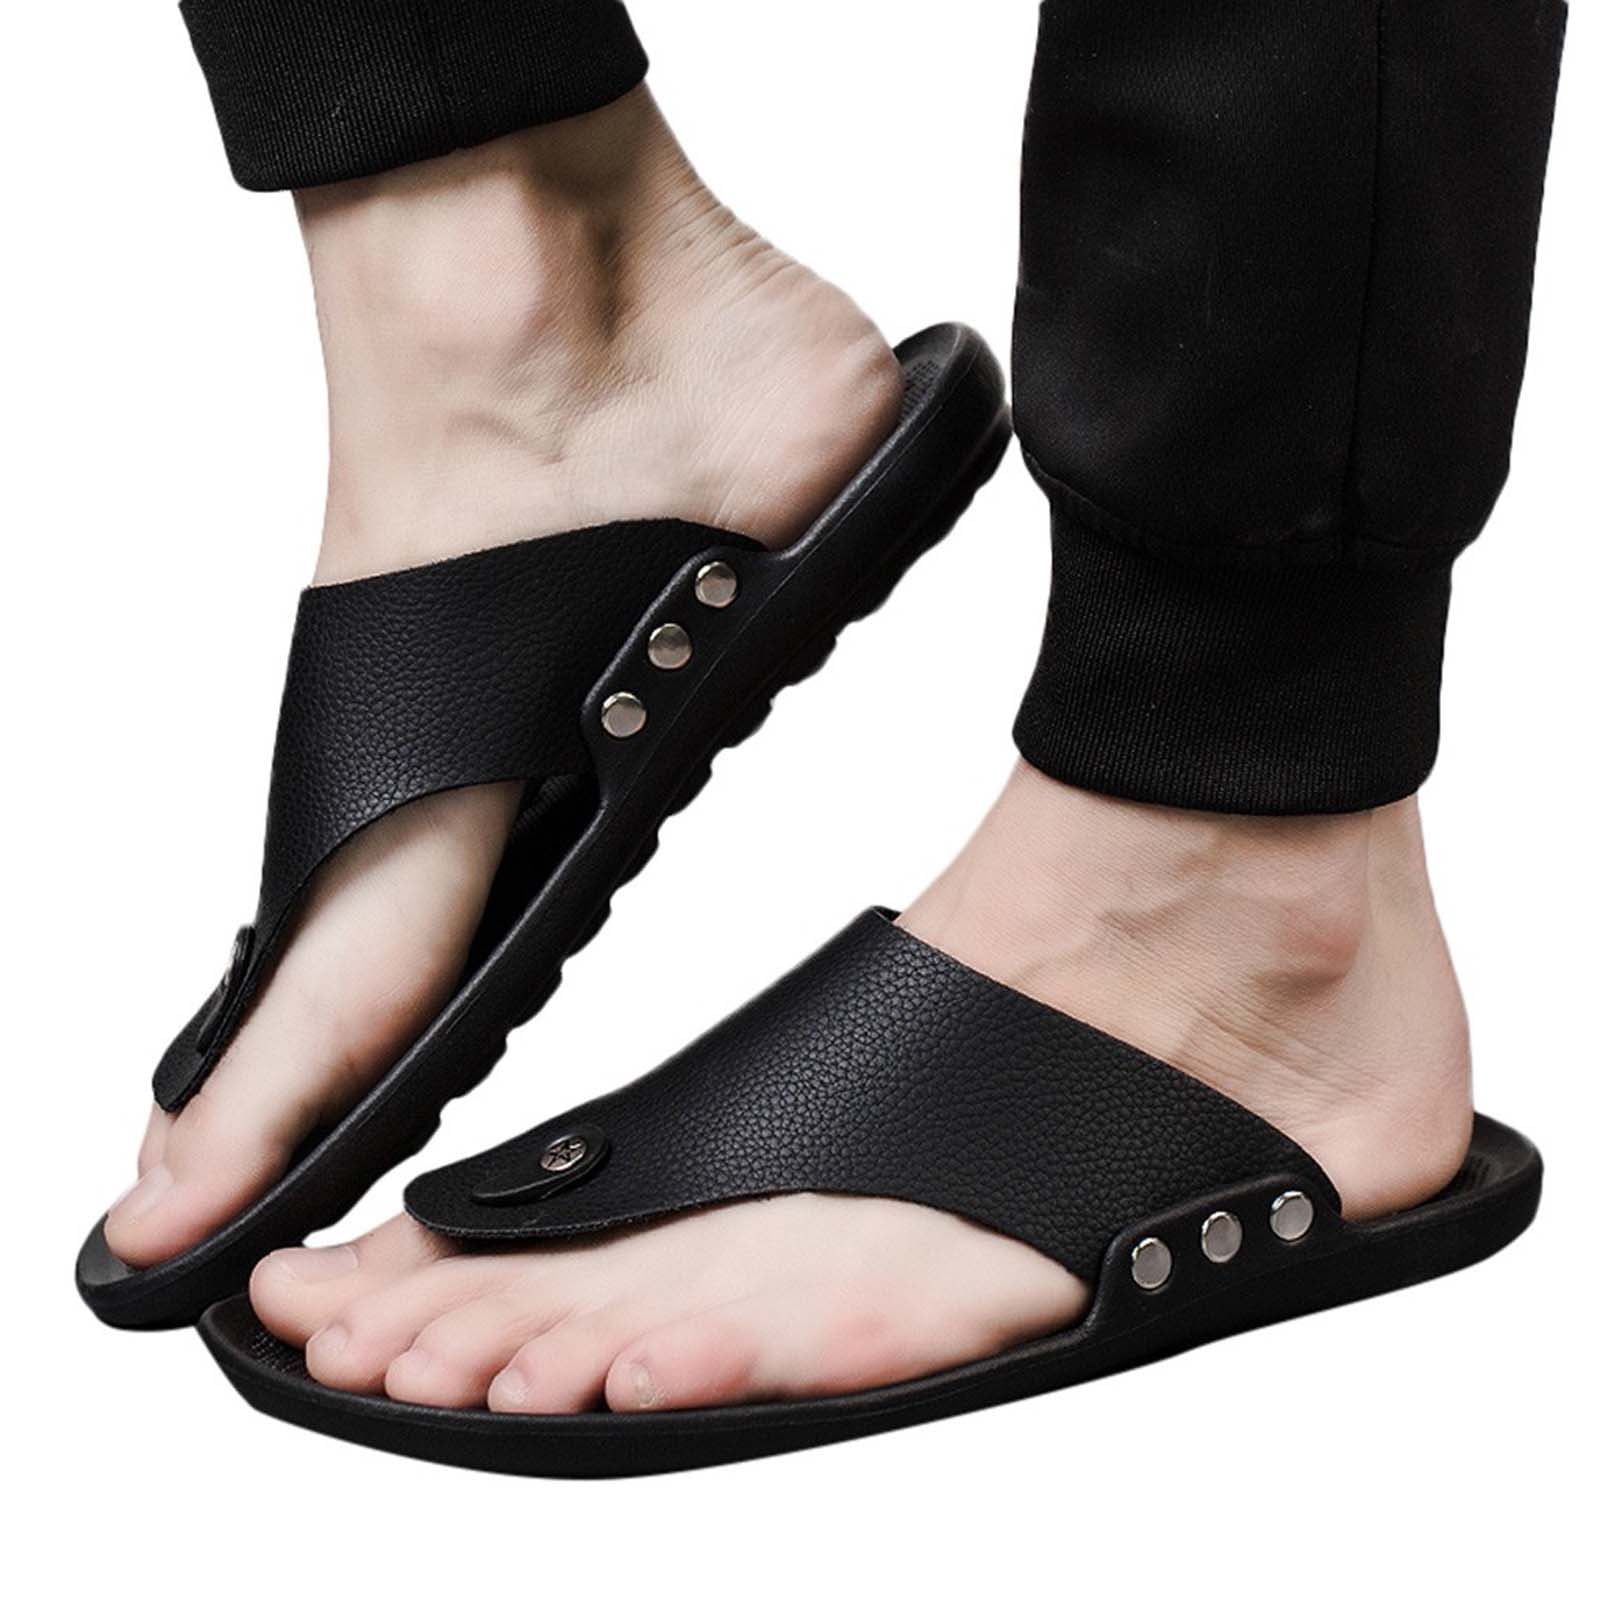 Olukai Men's 'Ohana Sandals - Black / Dark Shadow - Dance's Sporting Goods